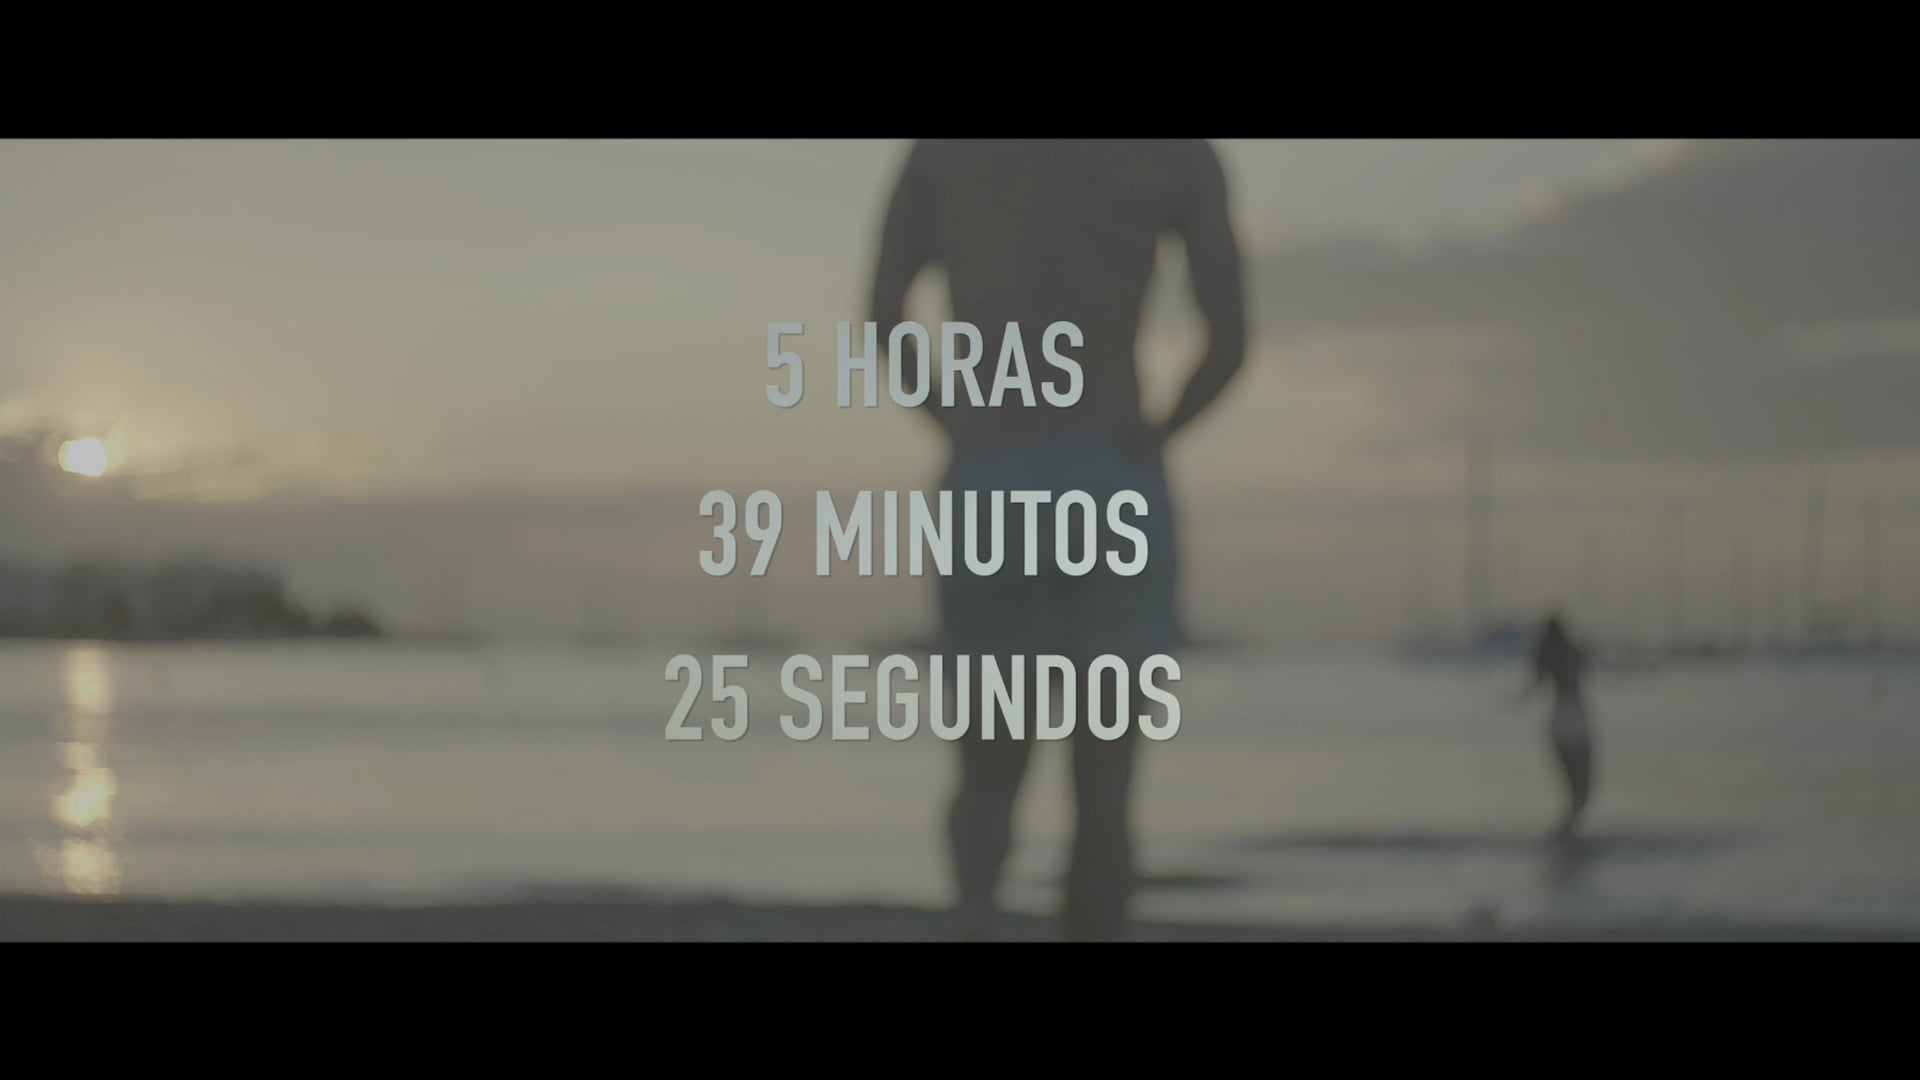 Trailer "5 horas, 39 minutos, 25 segundos"